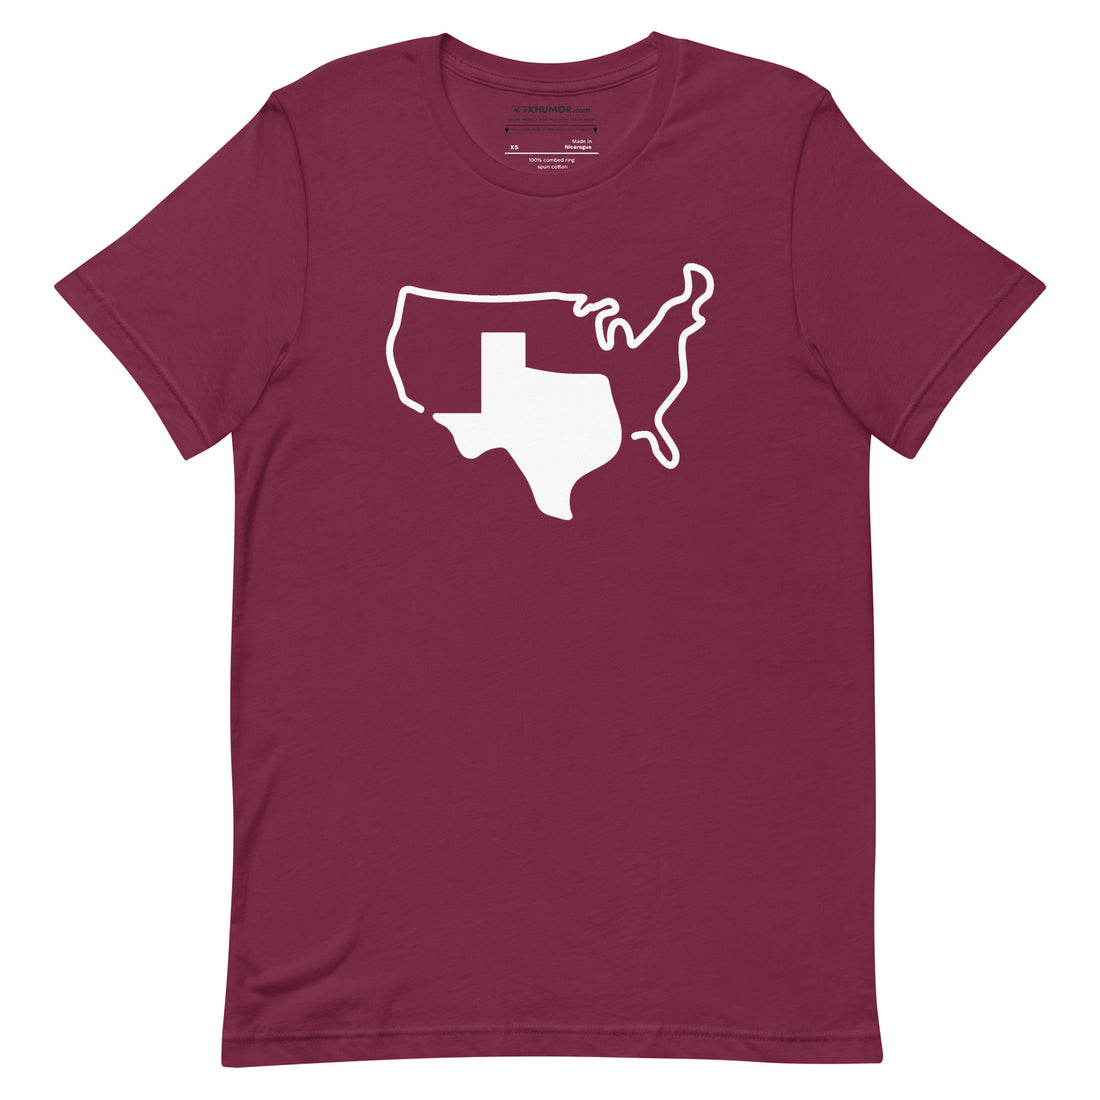 Grand Texas T-shirt